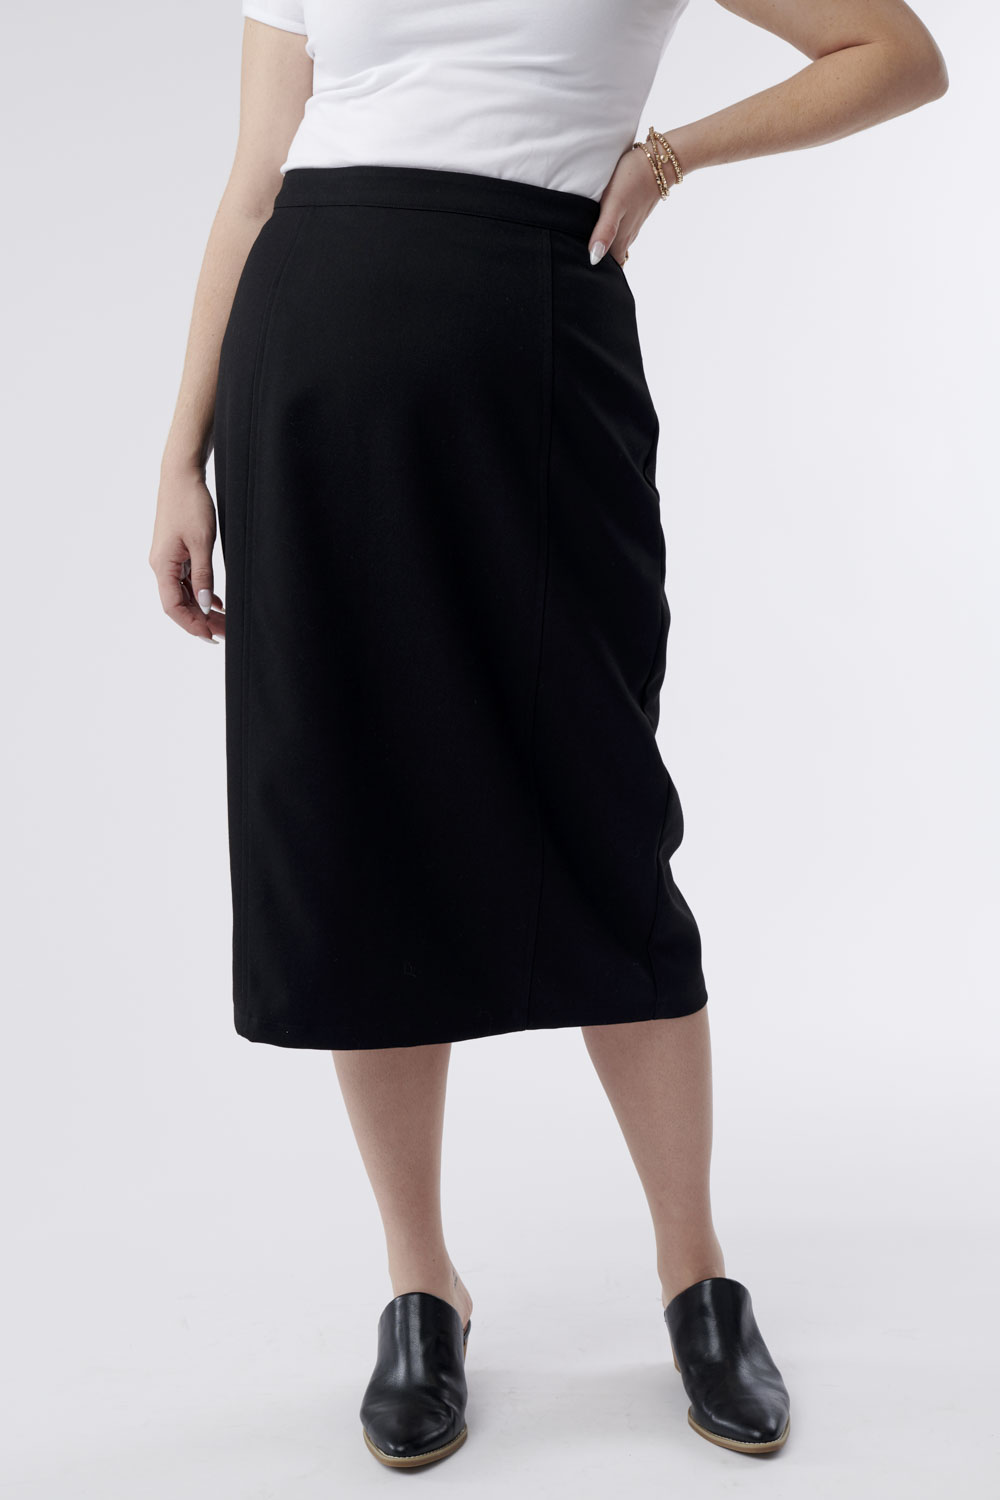 Skirt Perfect Pencil Midi Black | Sweet Salt Modest Clothing